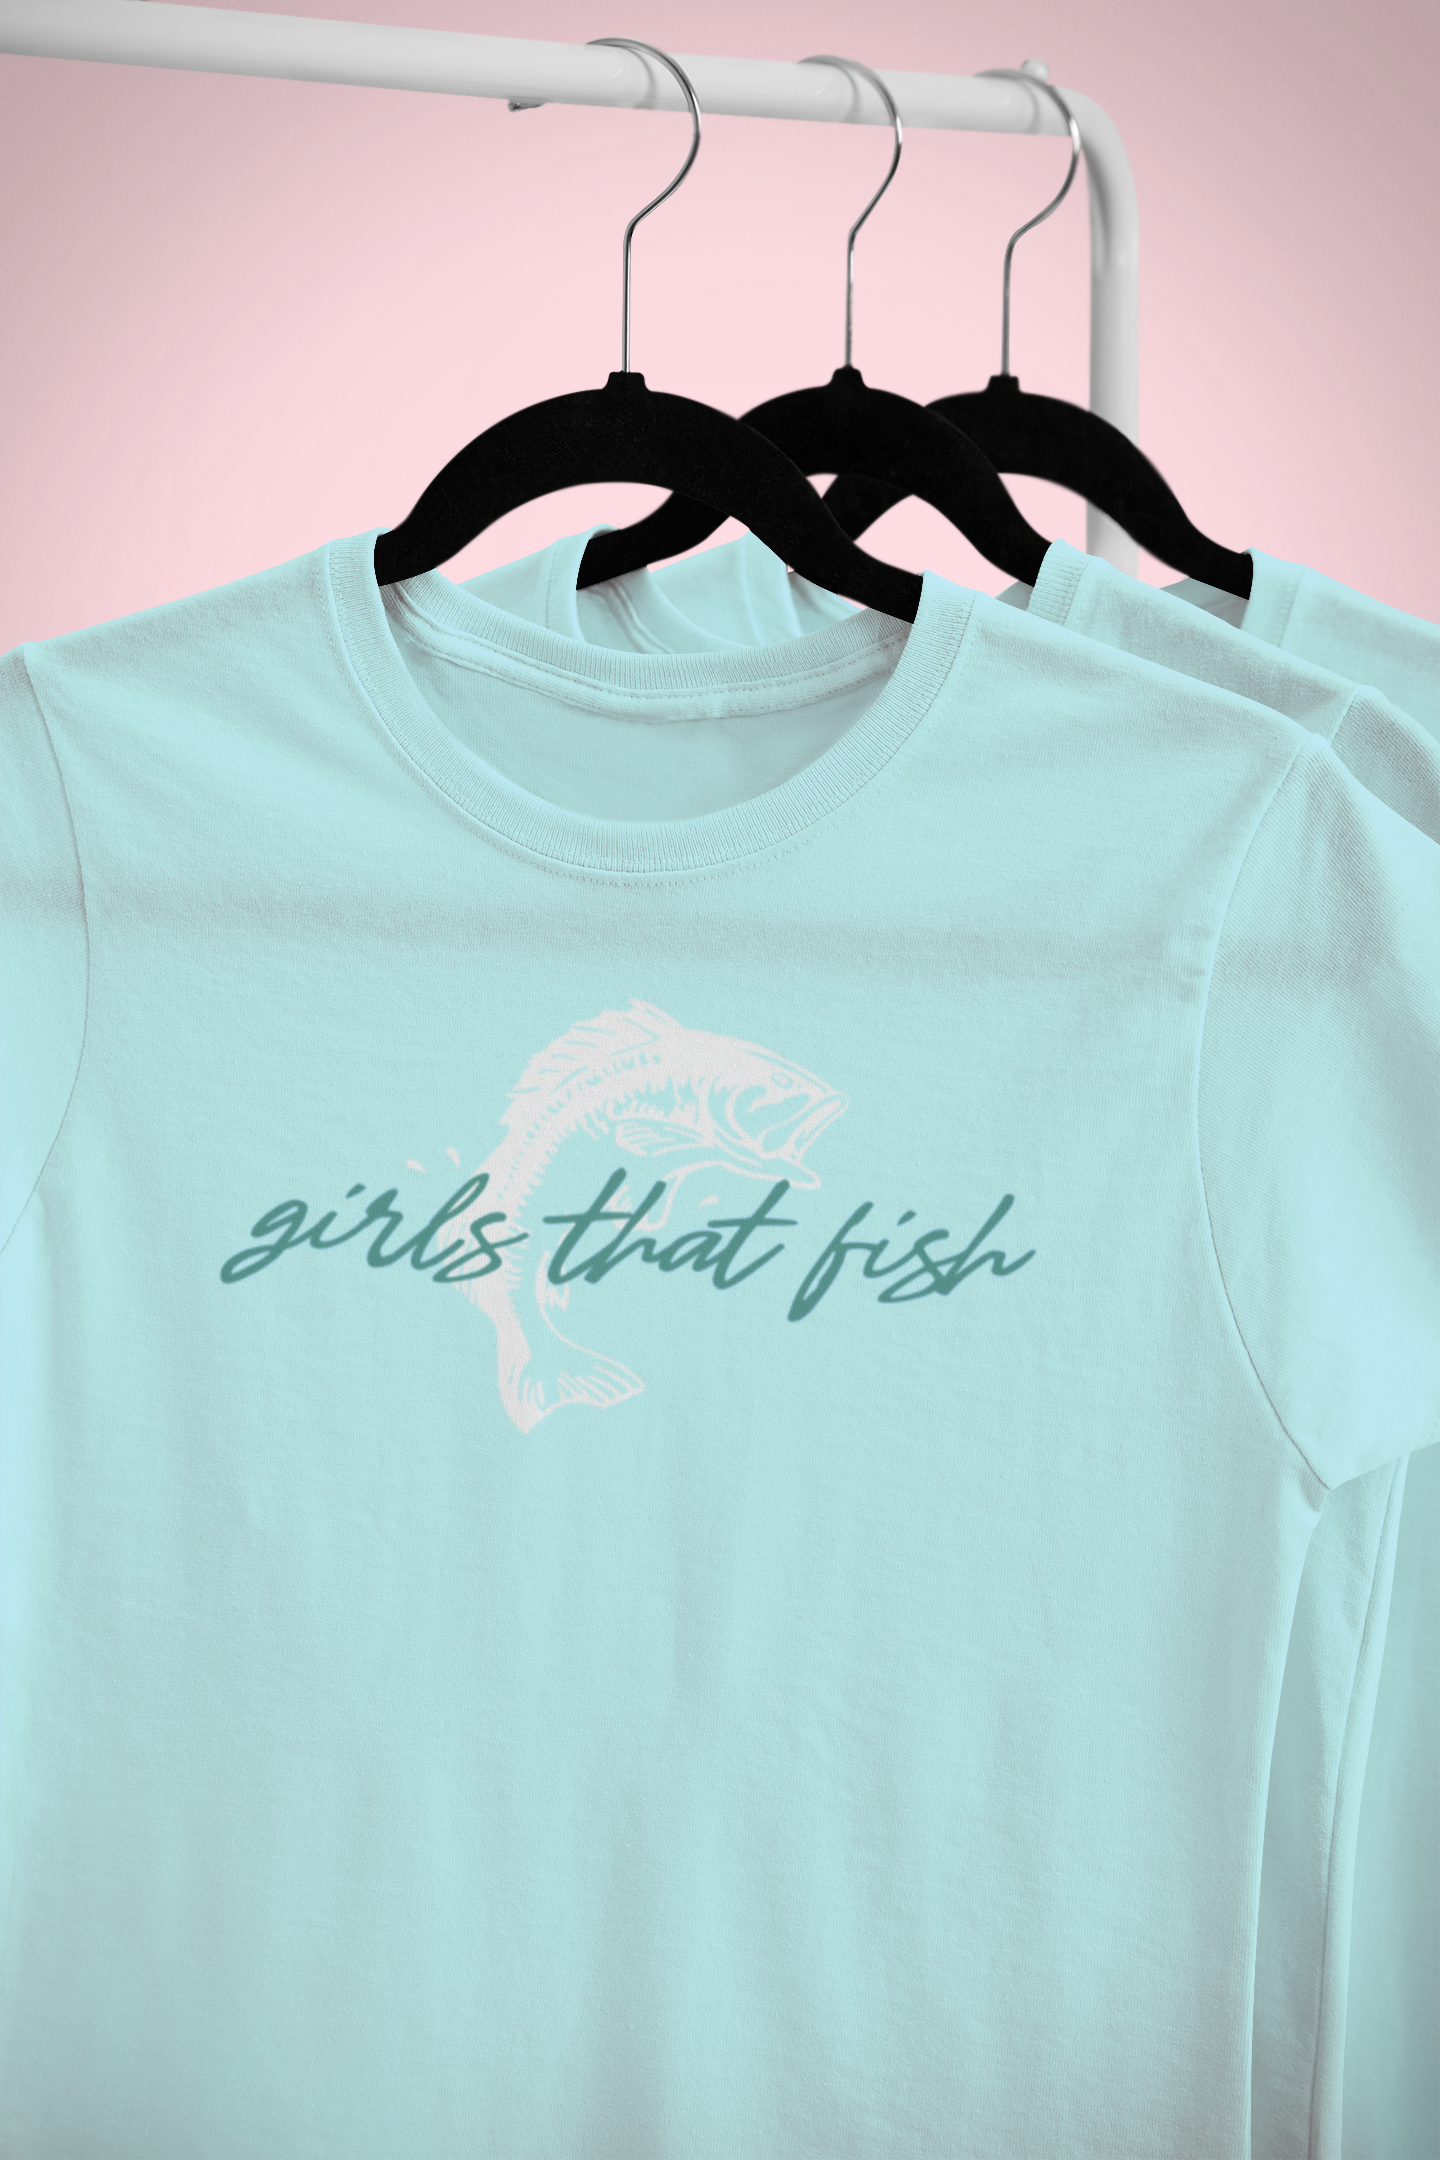 Girls That Fish T-Shirt